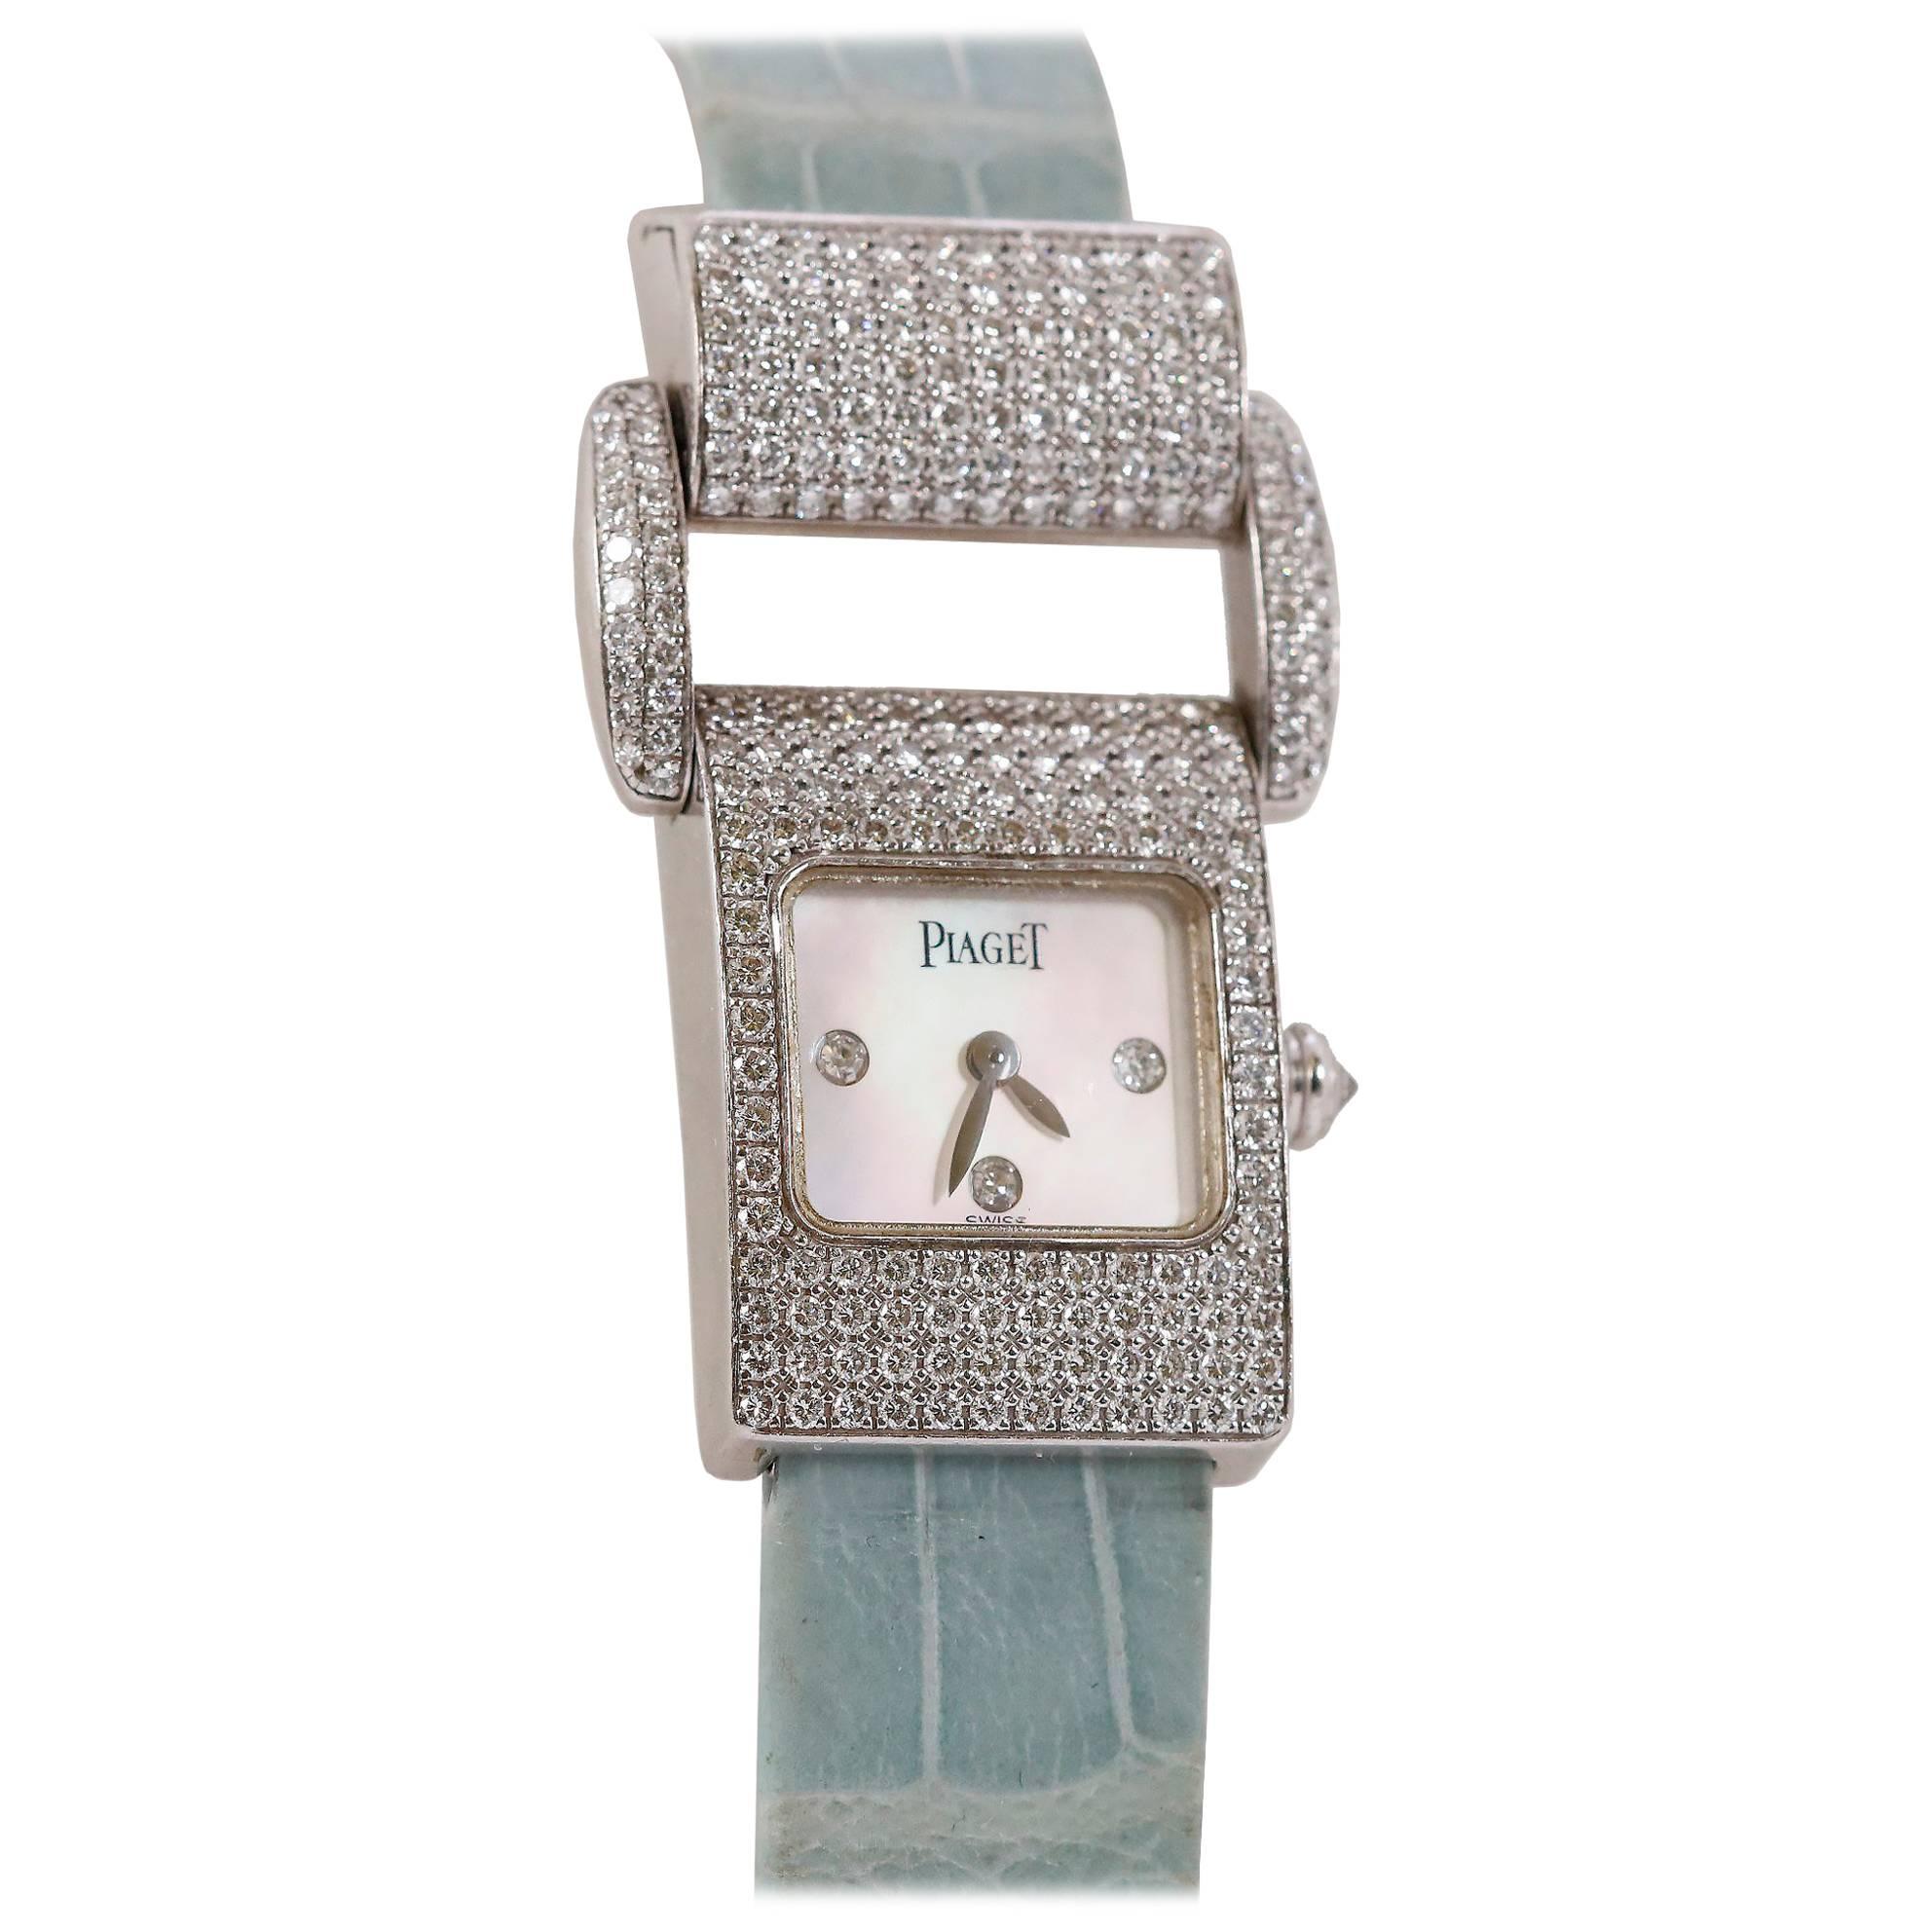 Piaget Ladies White Gold and Diamond Miss Protocole Wristwatch circa 2000